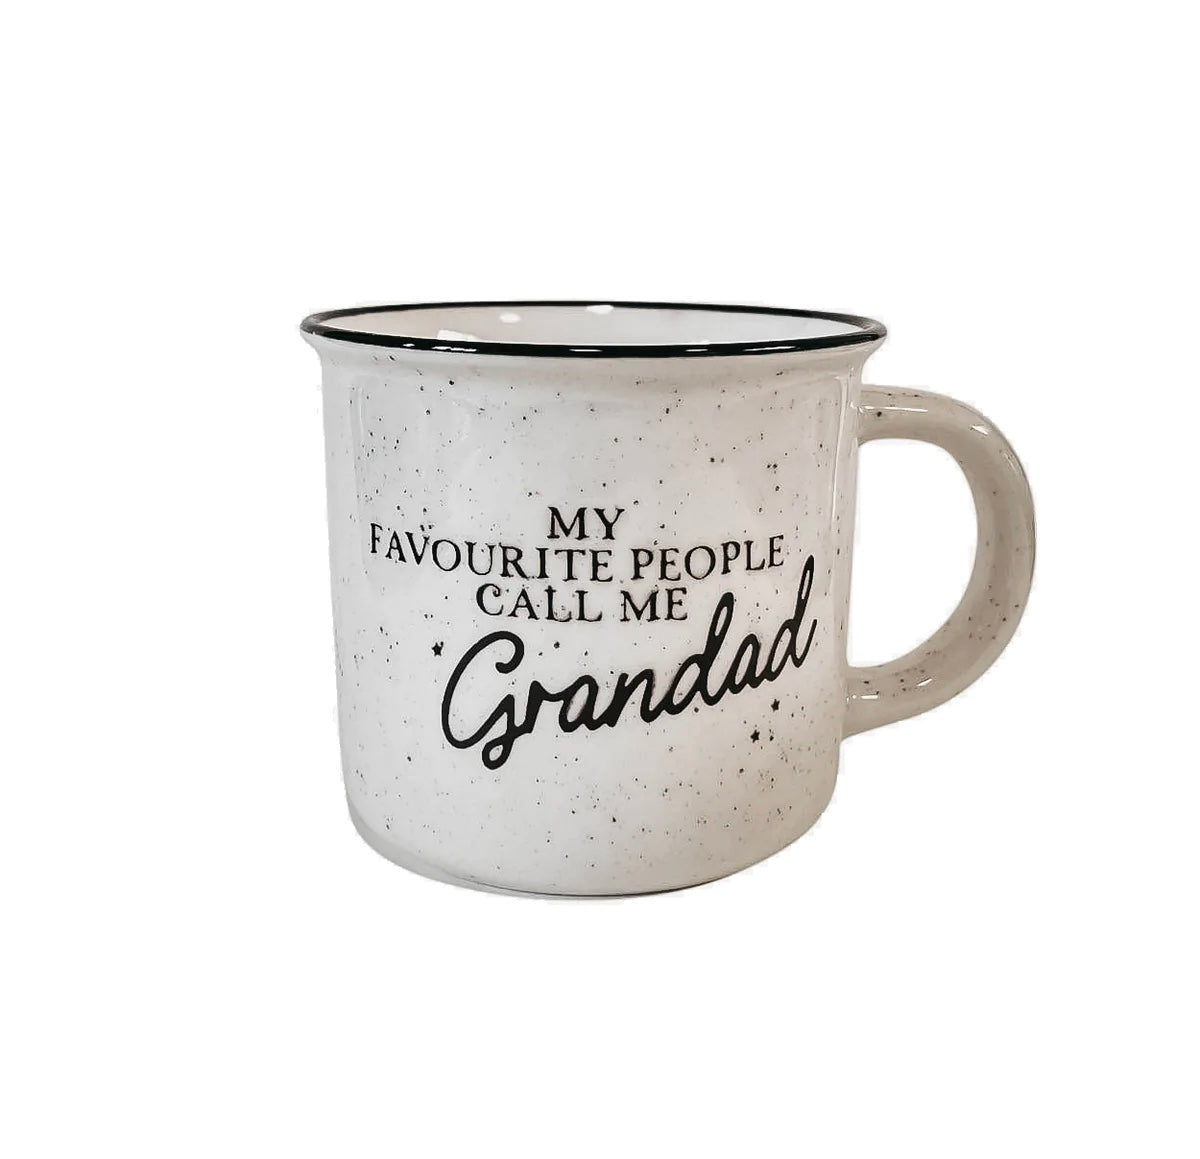 Grandad Mug